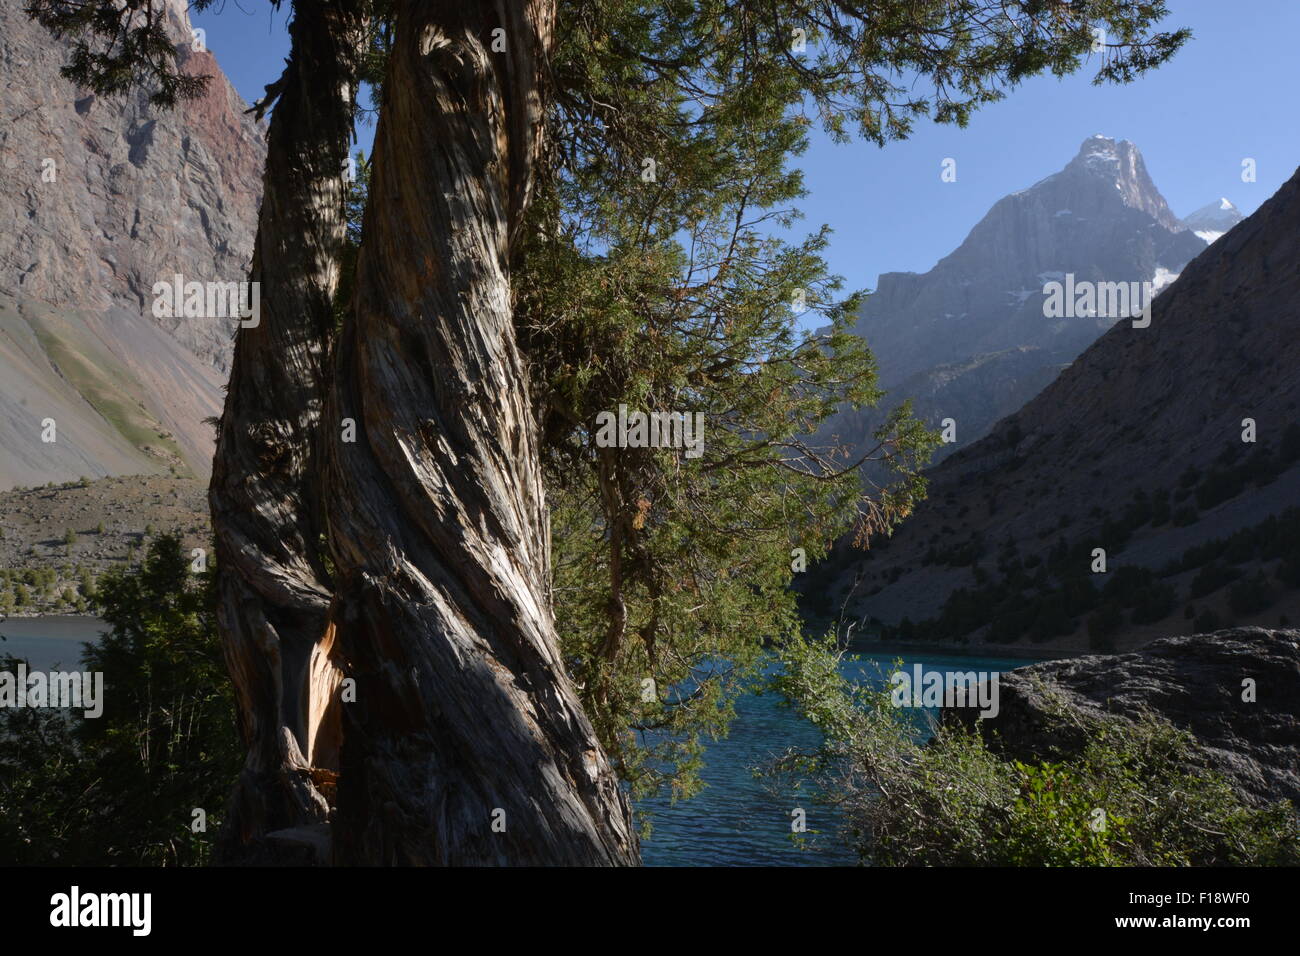 Juniper tree growing in natural mountain environment. Tajikistan collection Stock Photo